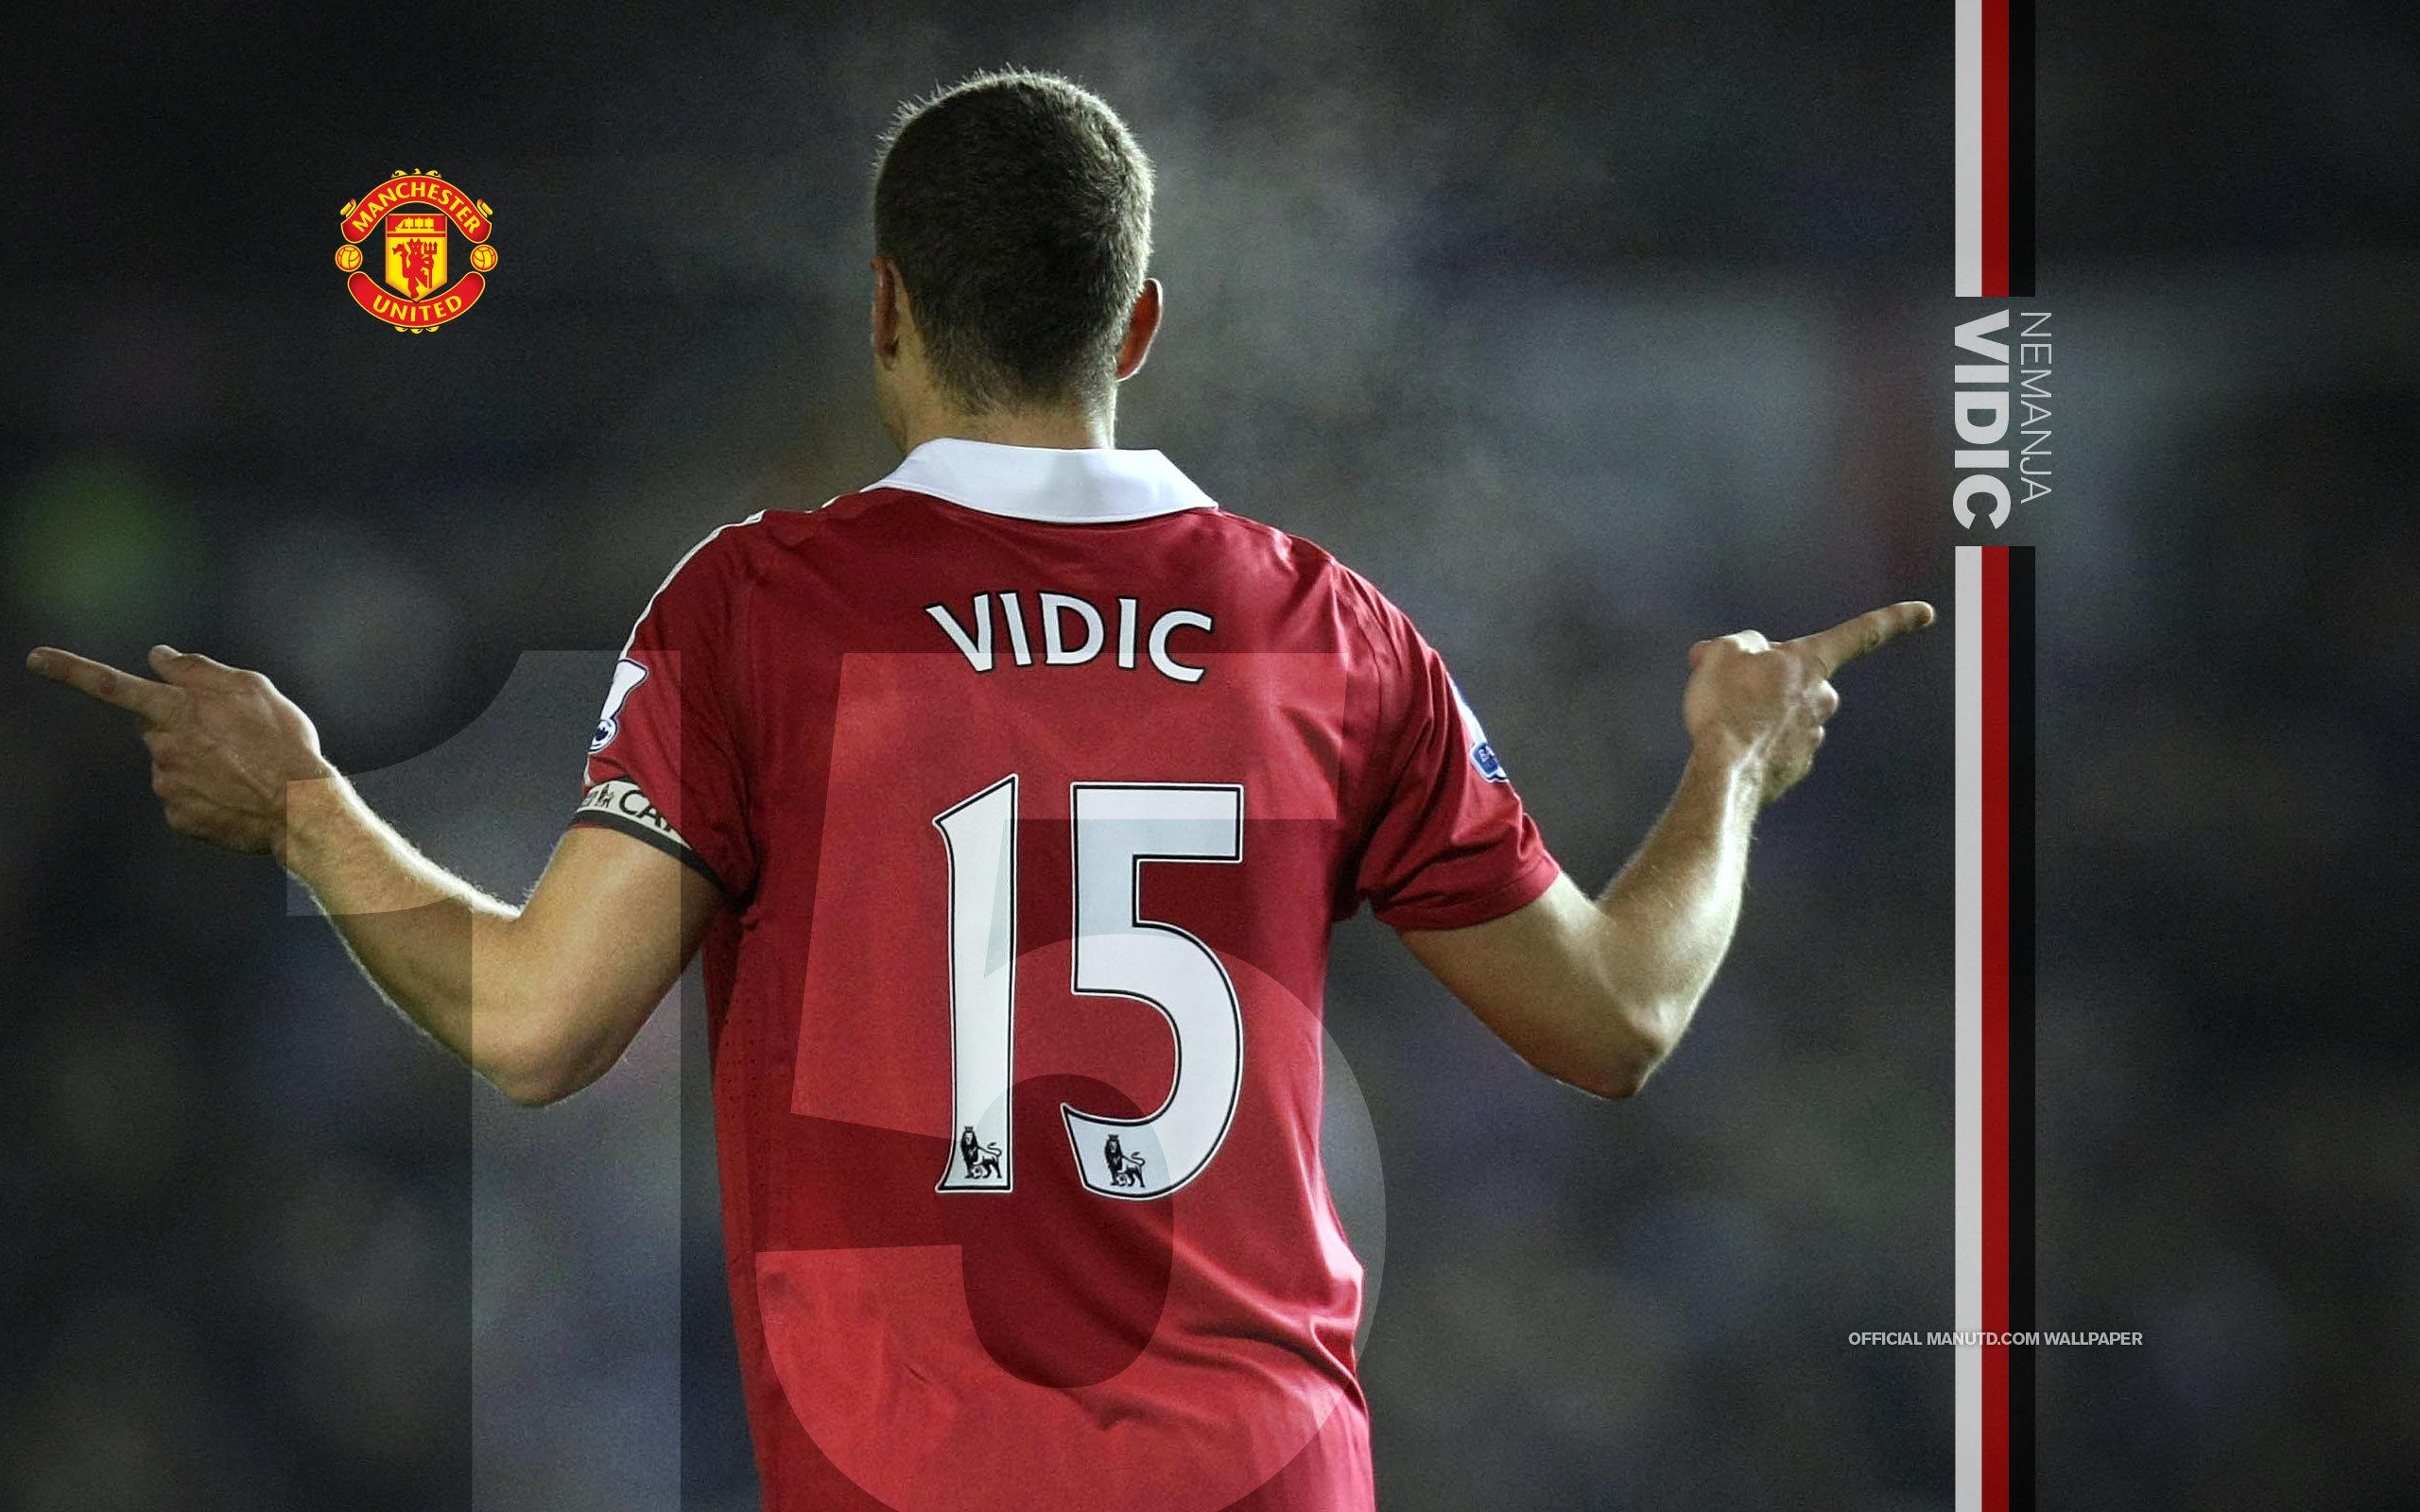 The best defender of Manchester United Nemanja Vidic wallpaper